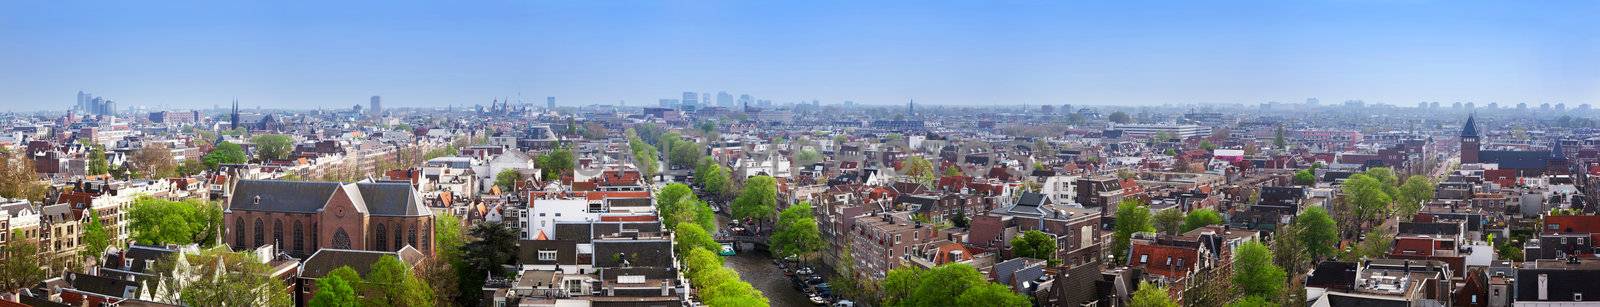 Amsterdam panorama, Holland, Netherlands by photocreo